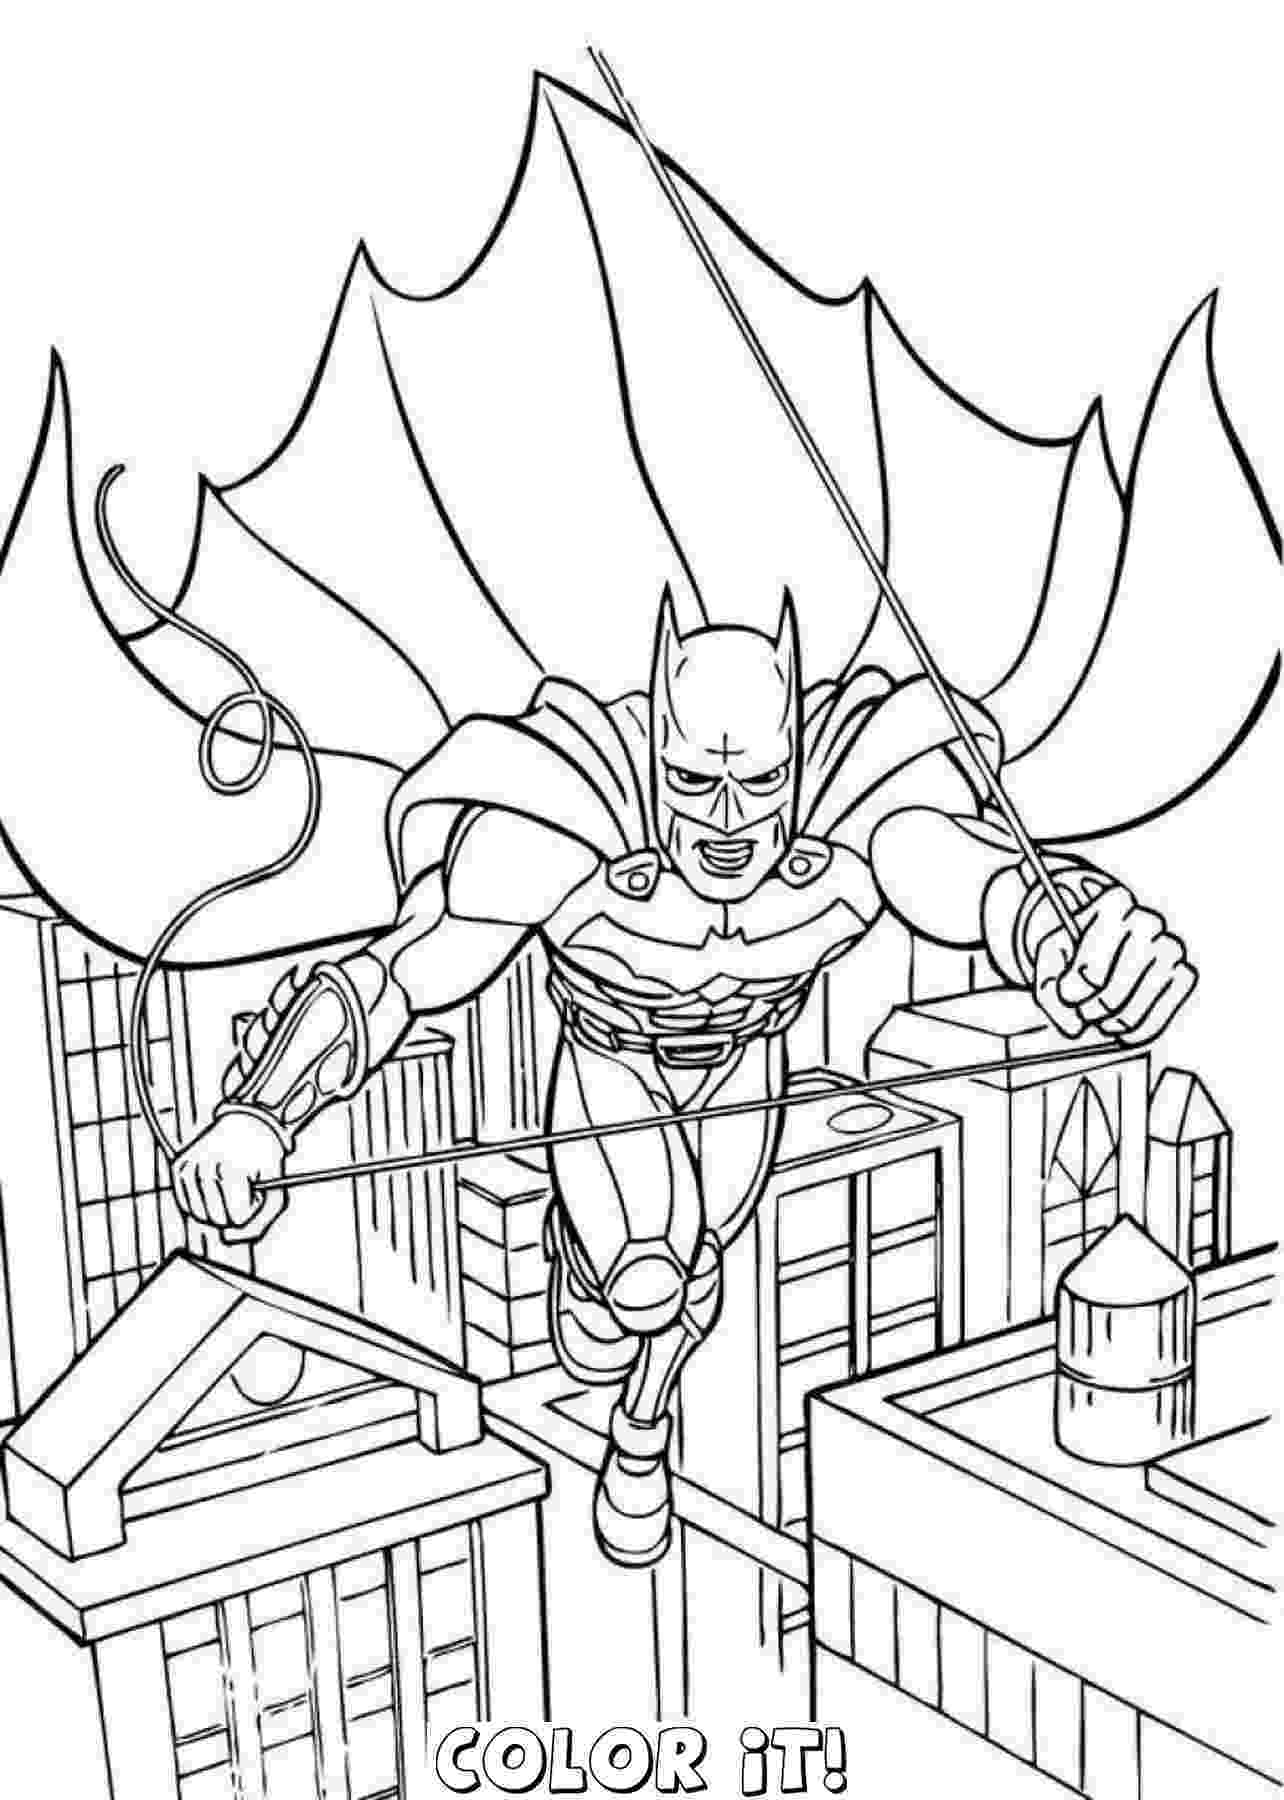 batman coloring pages free printable batman coloring pages to print free coloring sheets pages batman coloring printable free 